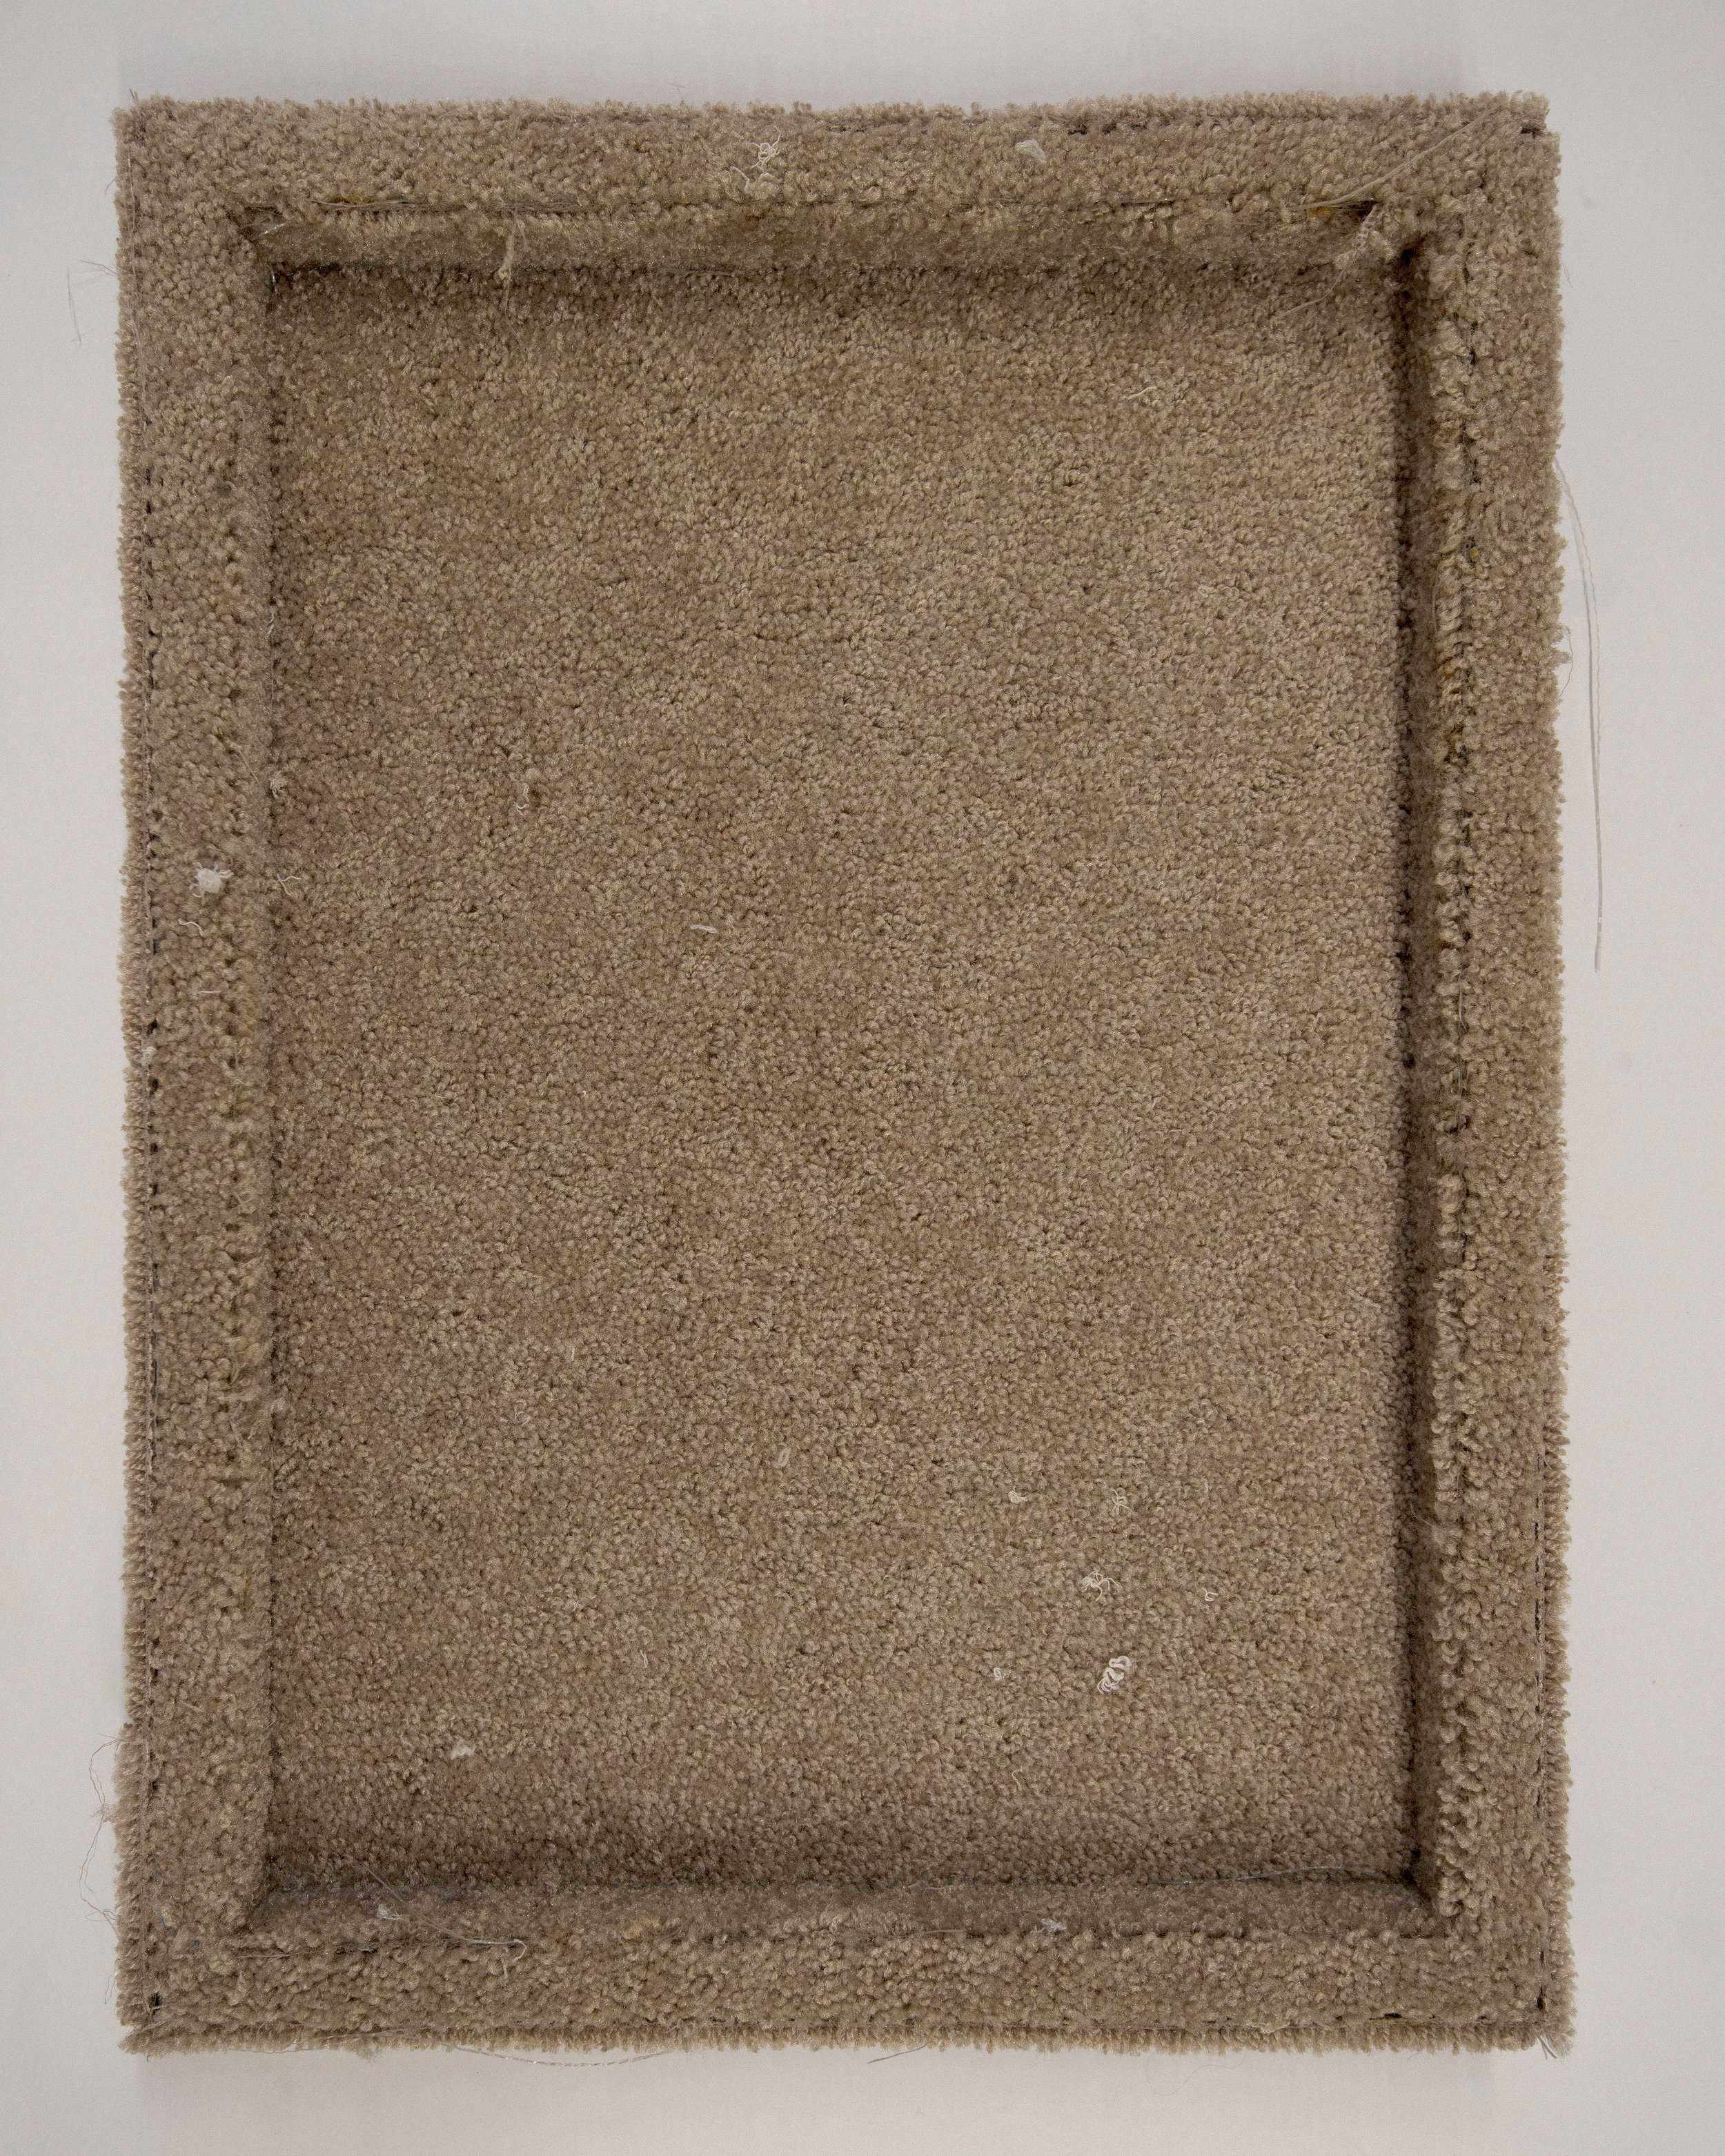  2017 carpet on cradled wood panel 24" x 18" 